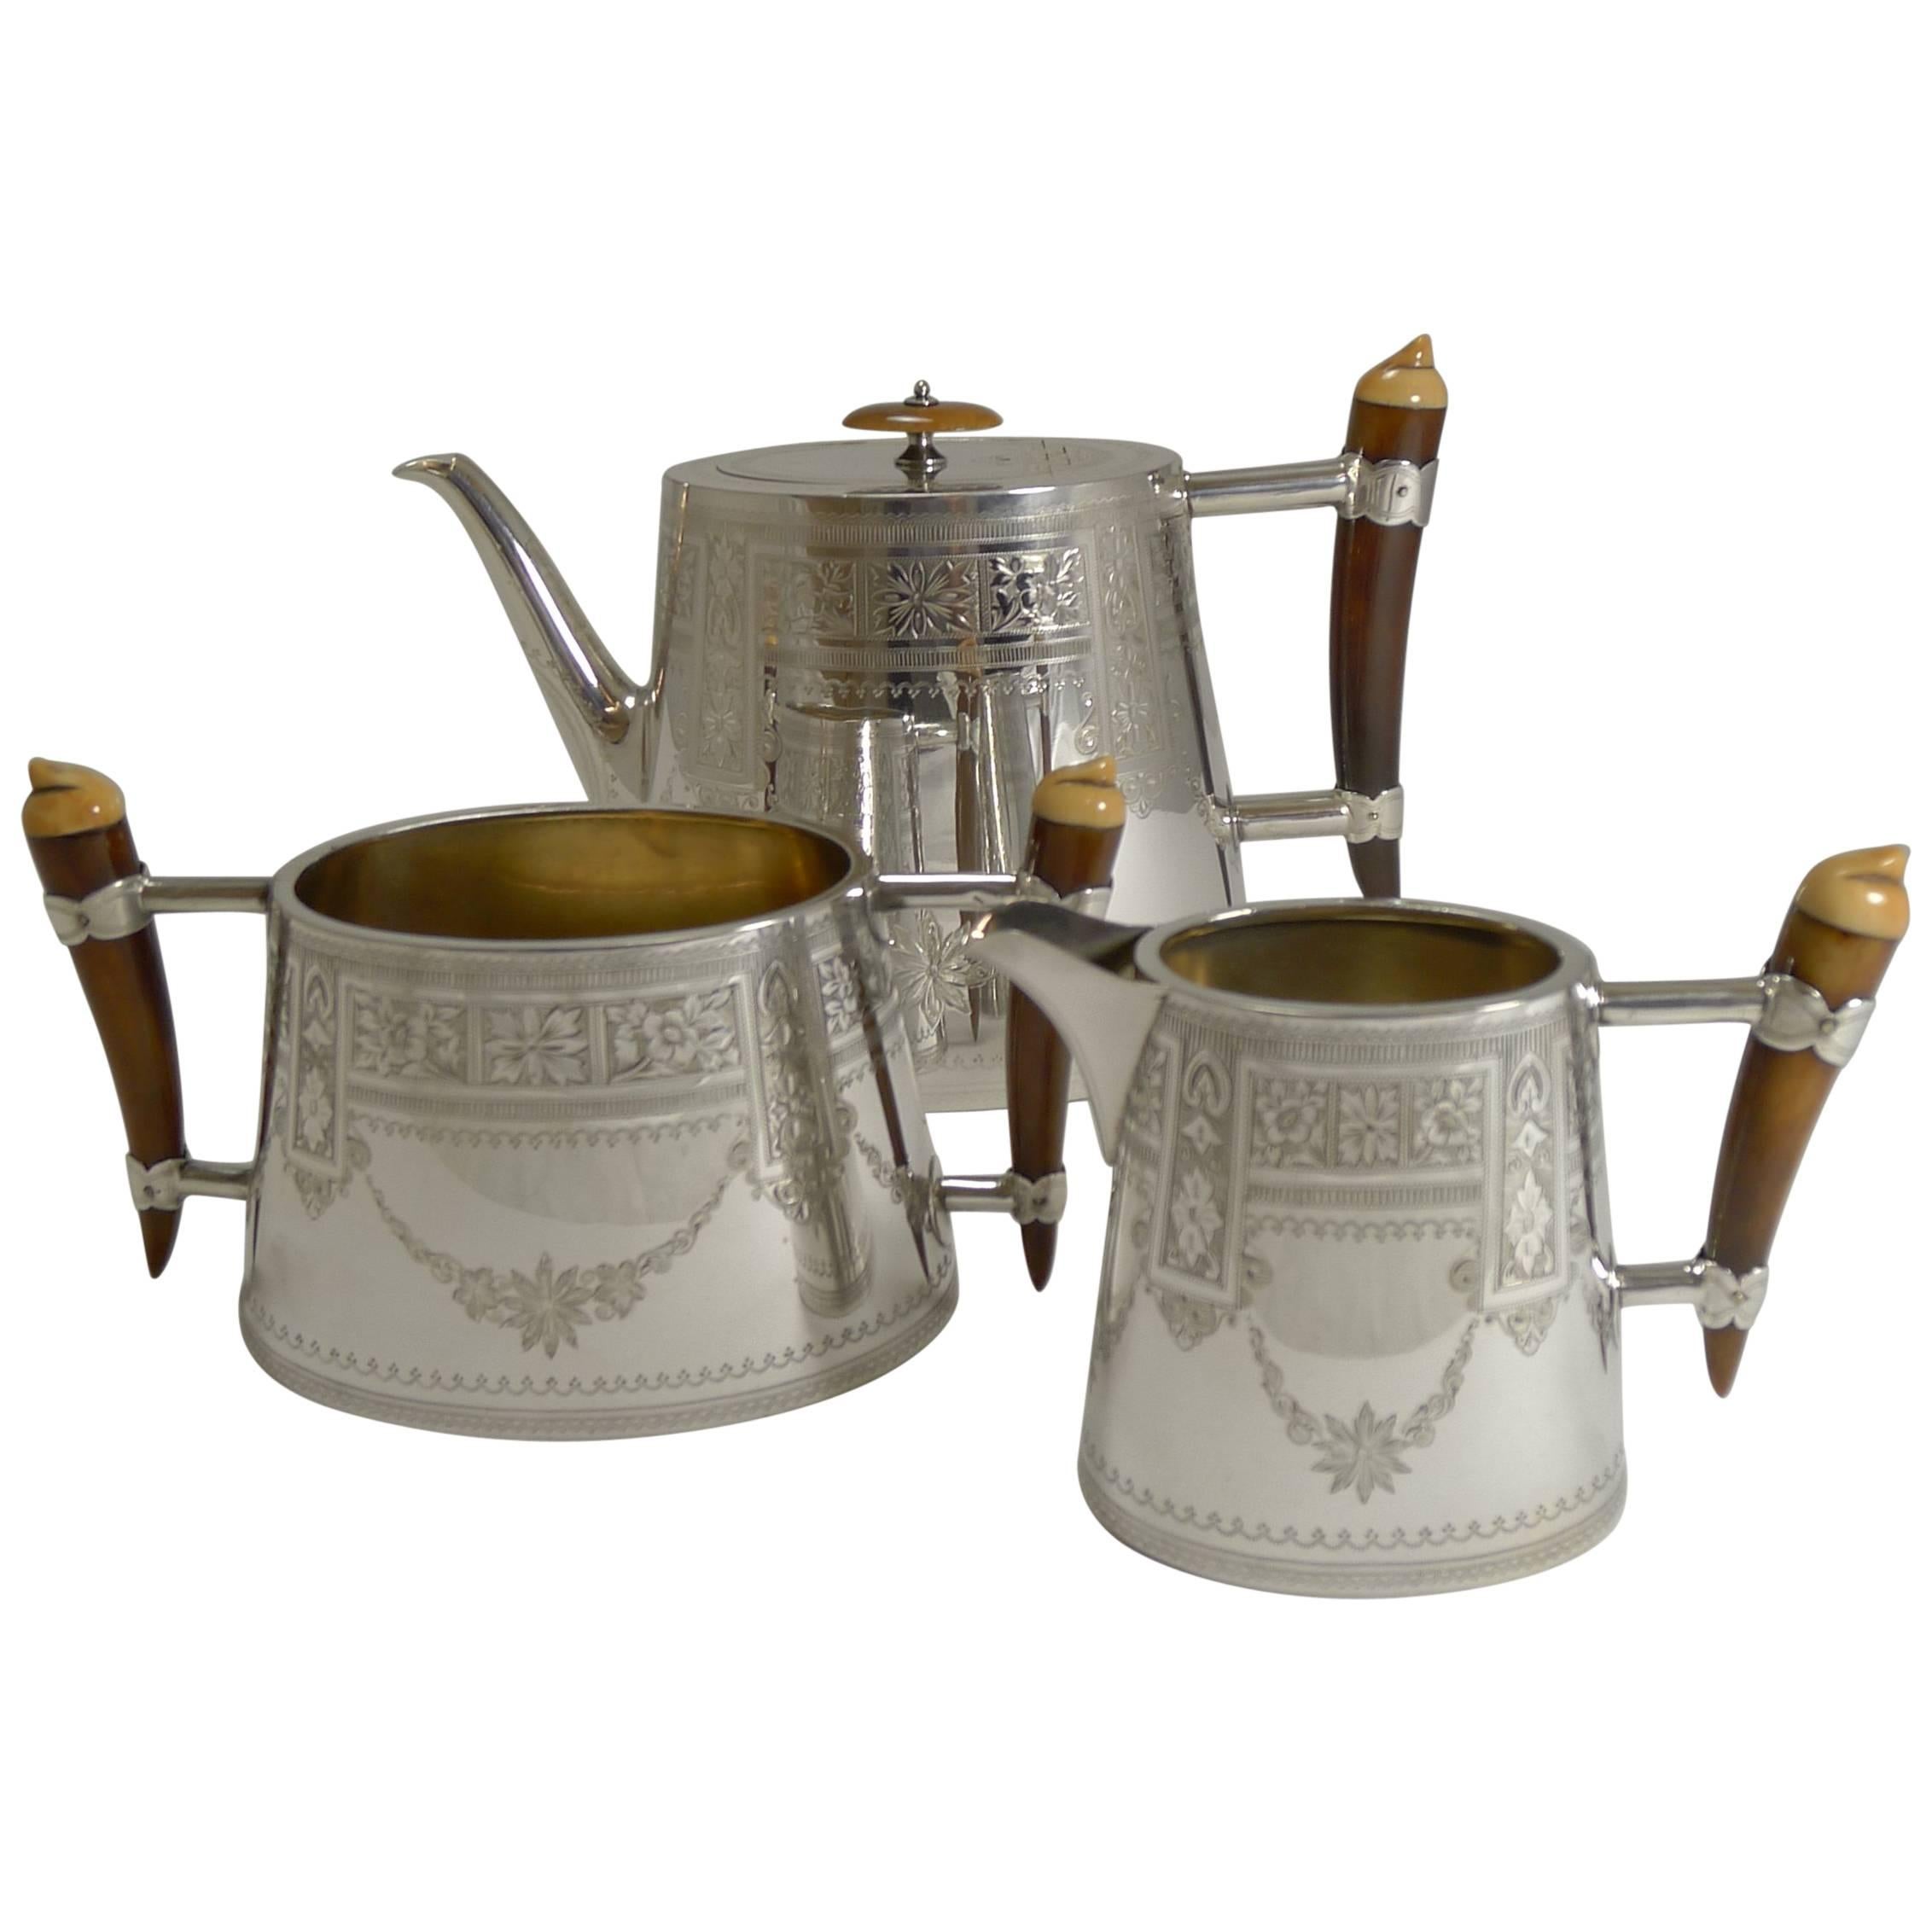 Unusual English Silver Plate and Polished Horn Tea Set, circa 1890